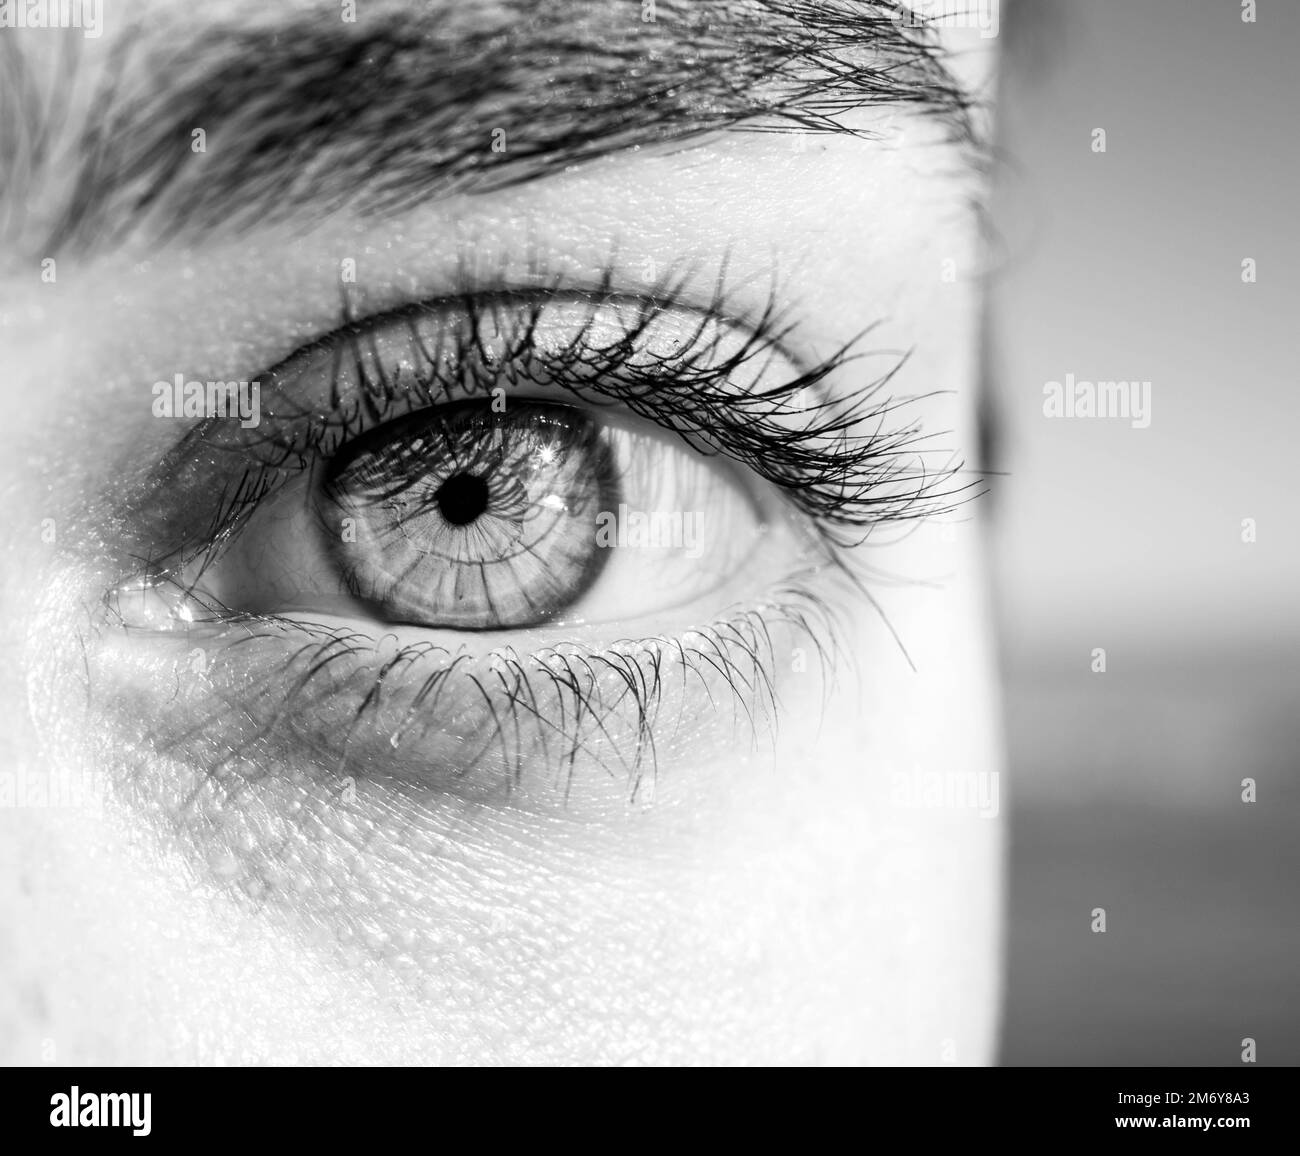 Human eye Black and White Stock Photos & Images - Alamy